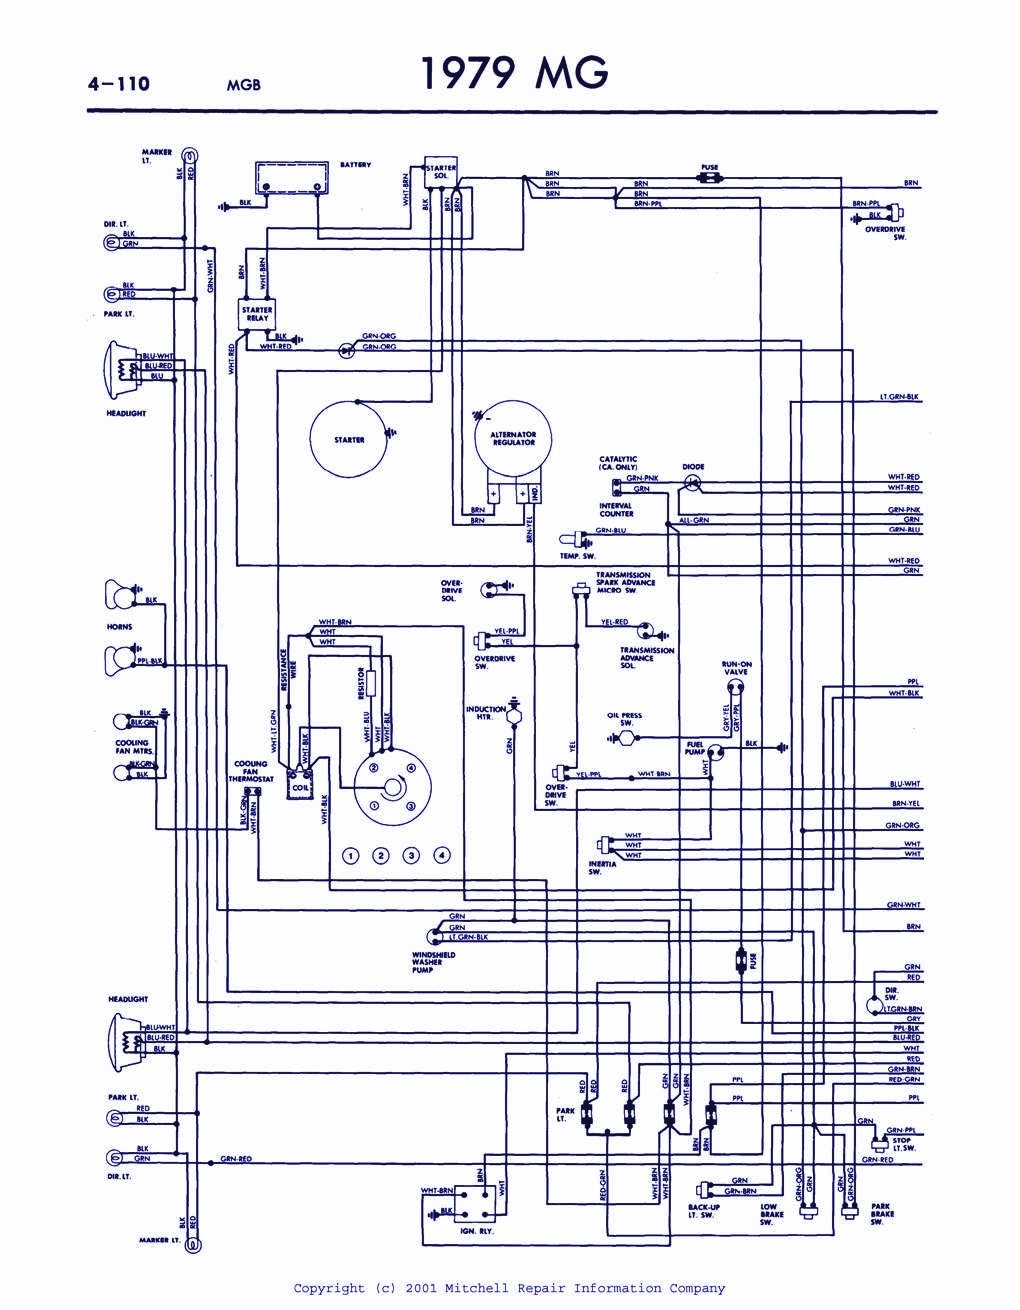 hzj75 headlight wiring diagram wiring diagrams konsultmgb headlight wiring diagram wiring diagram paper hzj75 headlight wiring